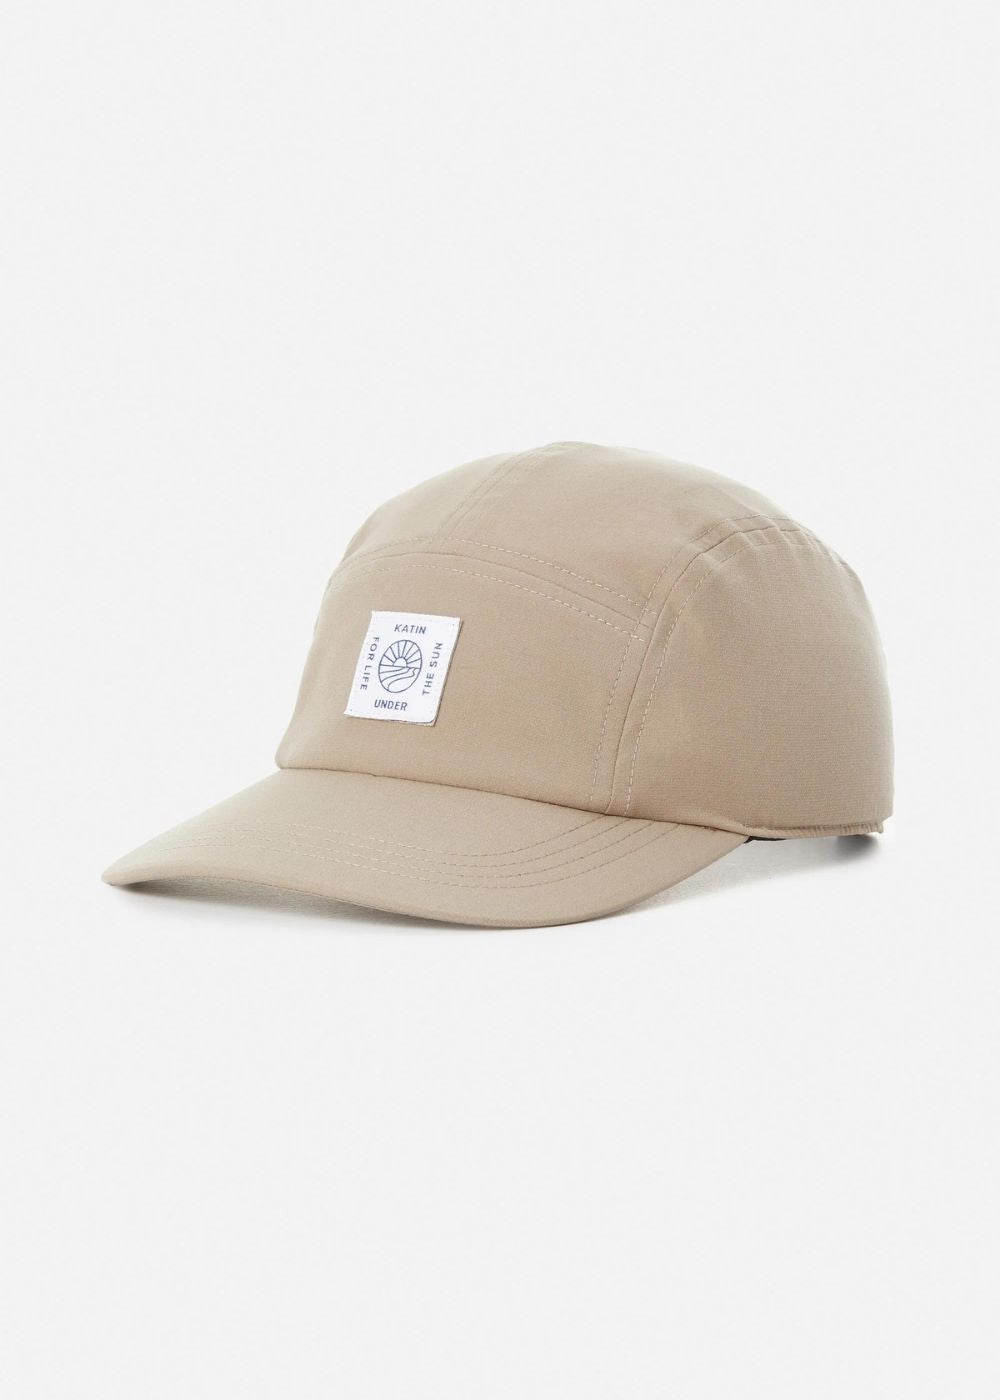 OTG Scenic Hat - כובע מצחייה מנדף זיעה צבע טבעי